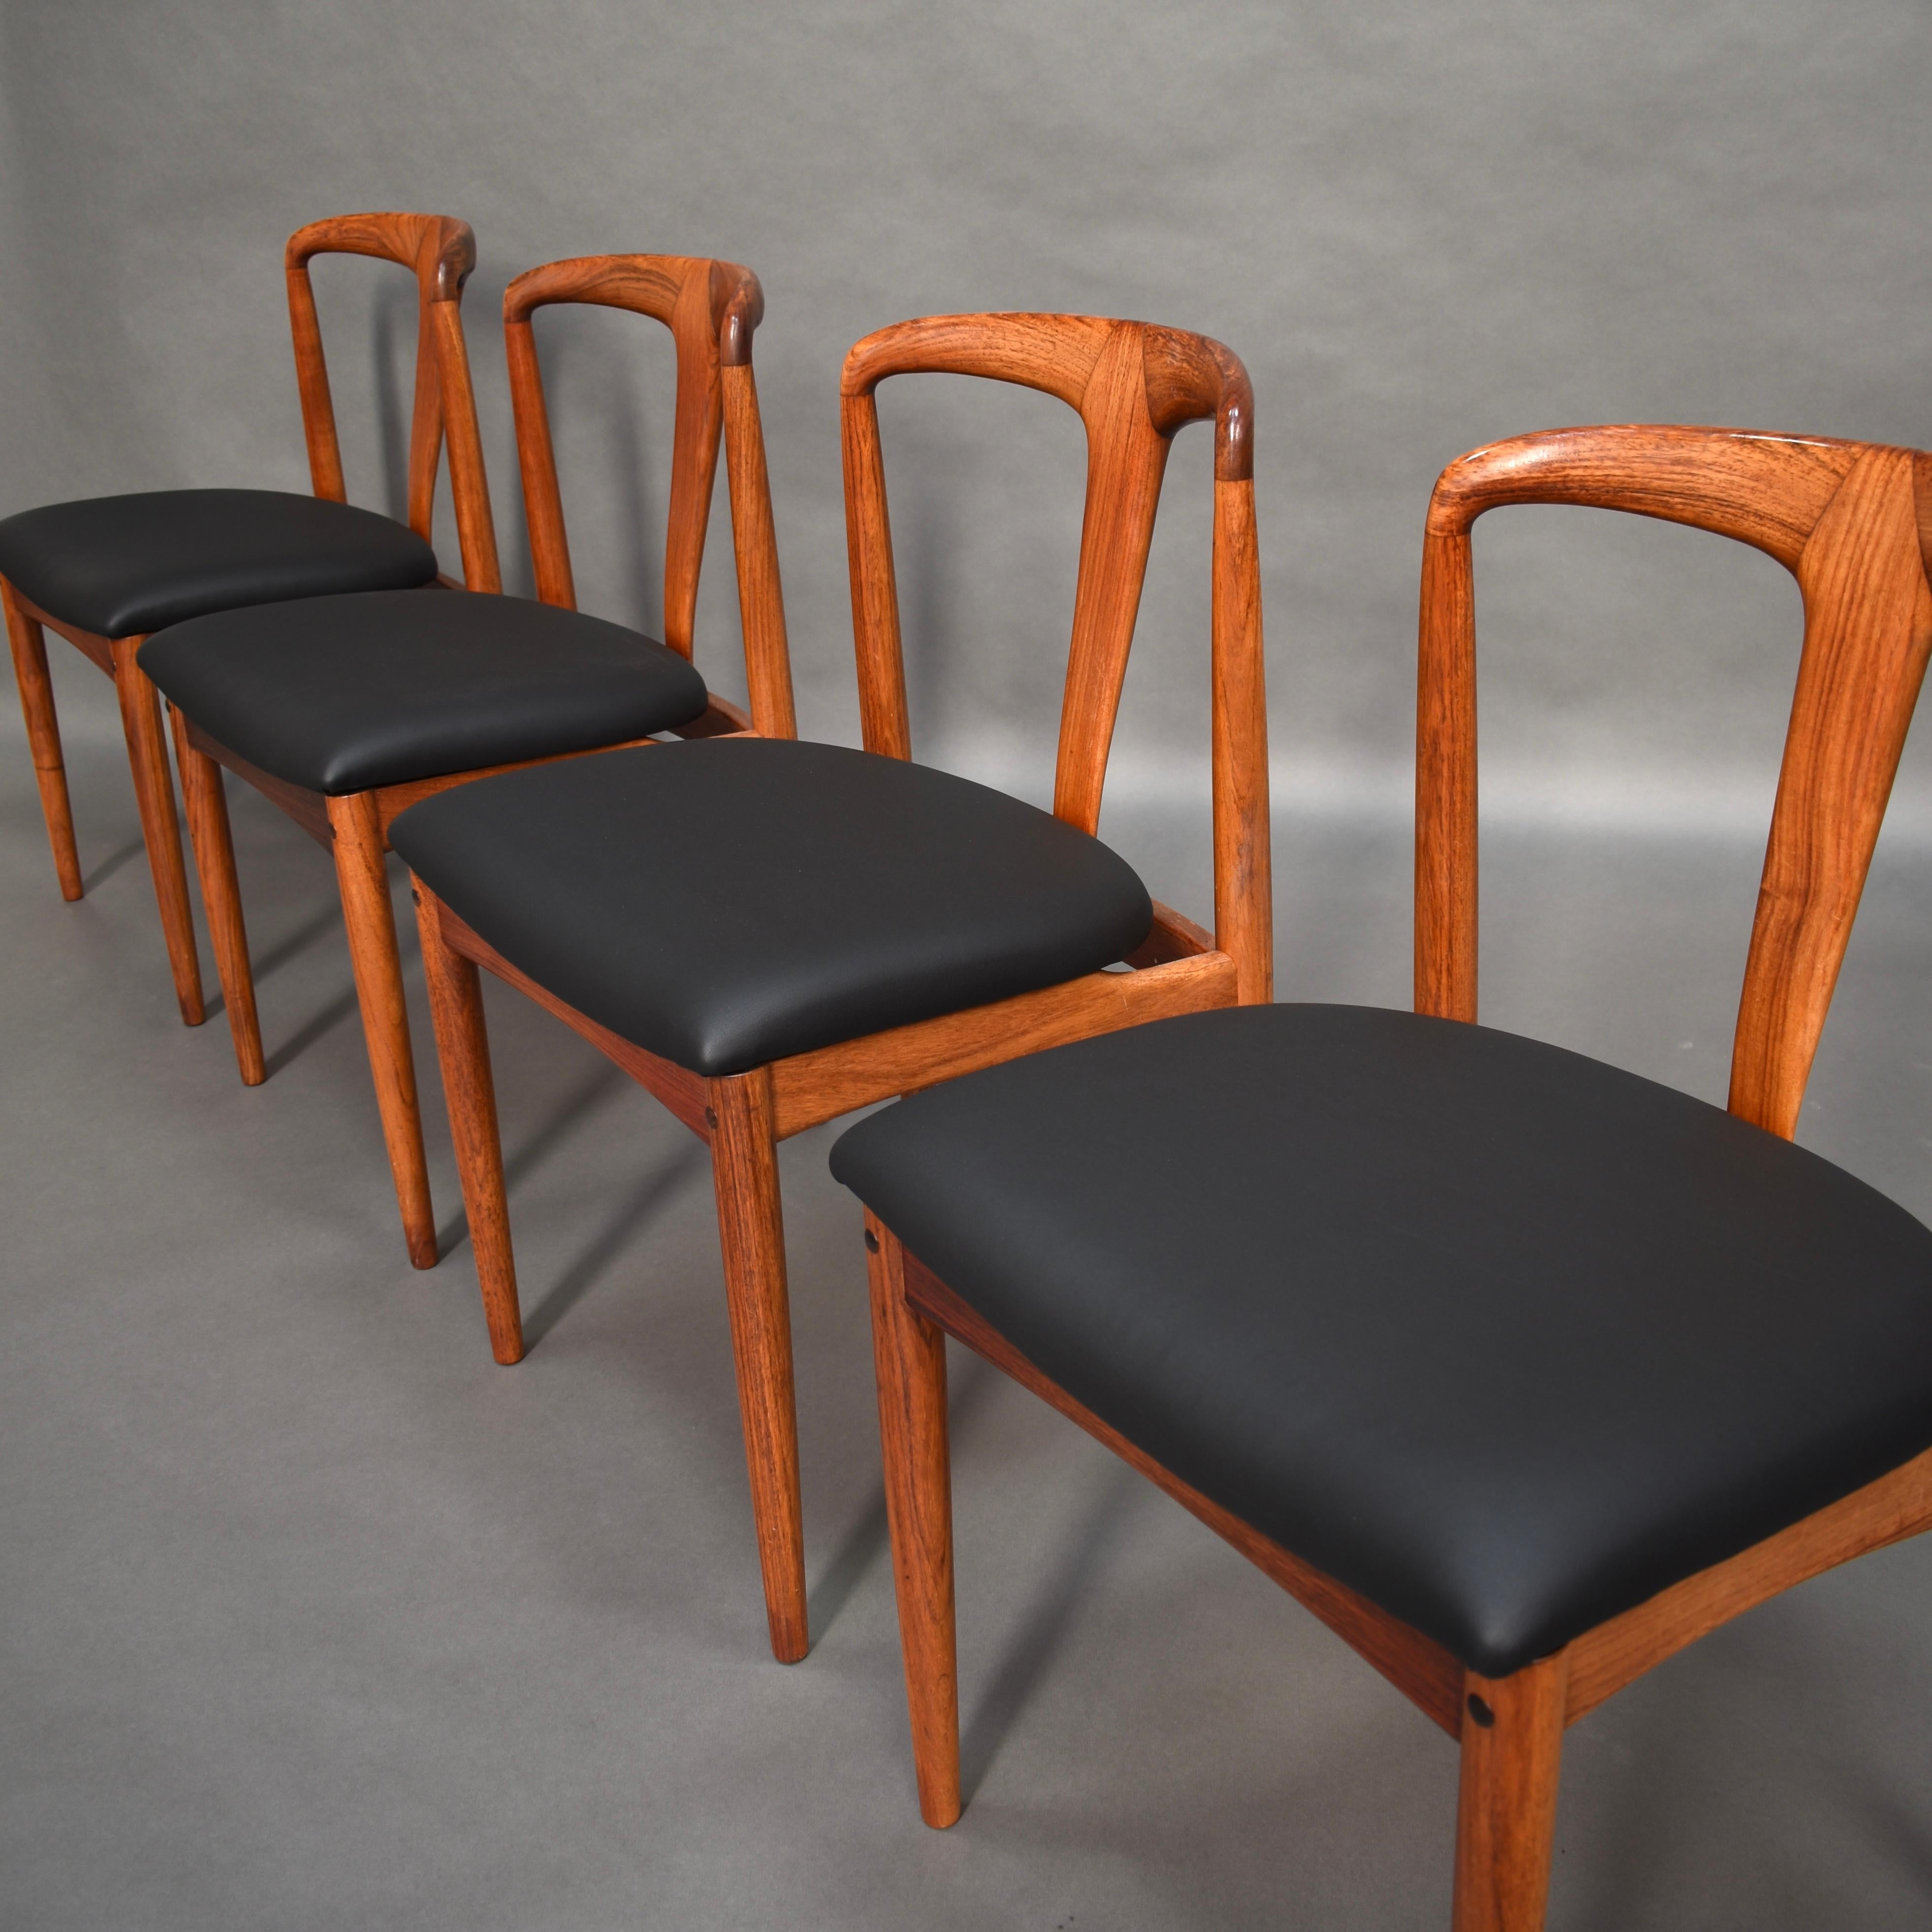 Danish Scandinavian Johannes Andersen Chairs with New Upholstery, Denmark, 1960s